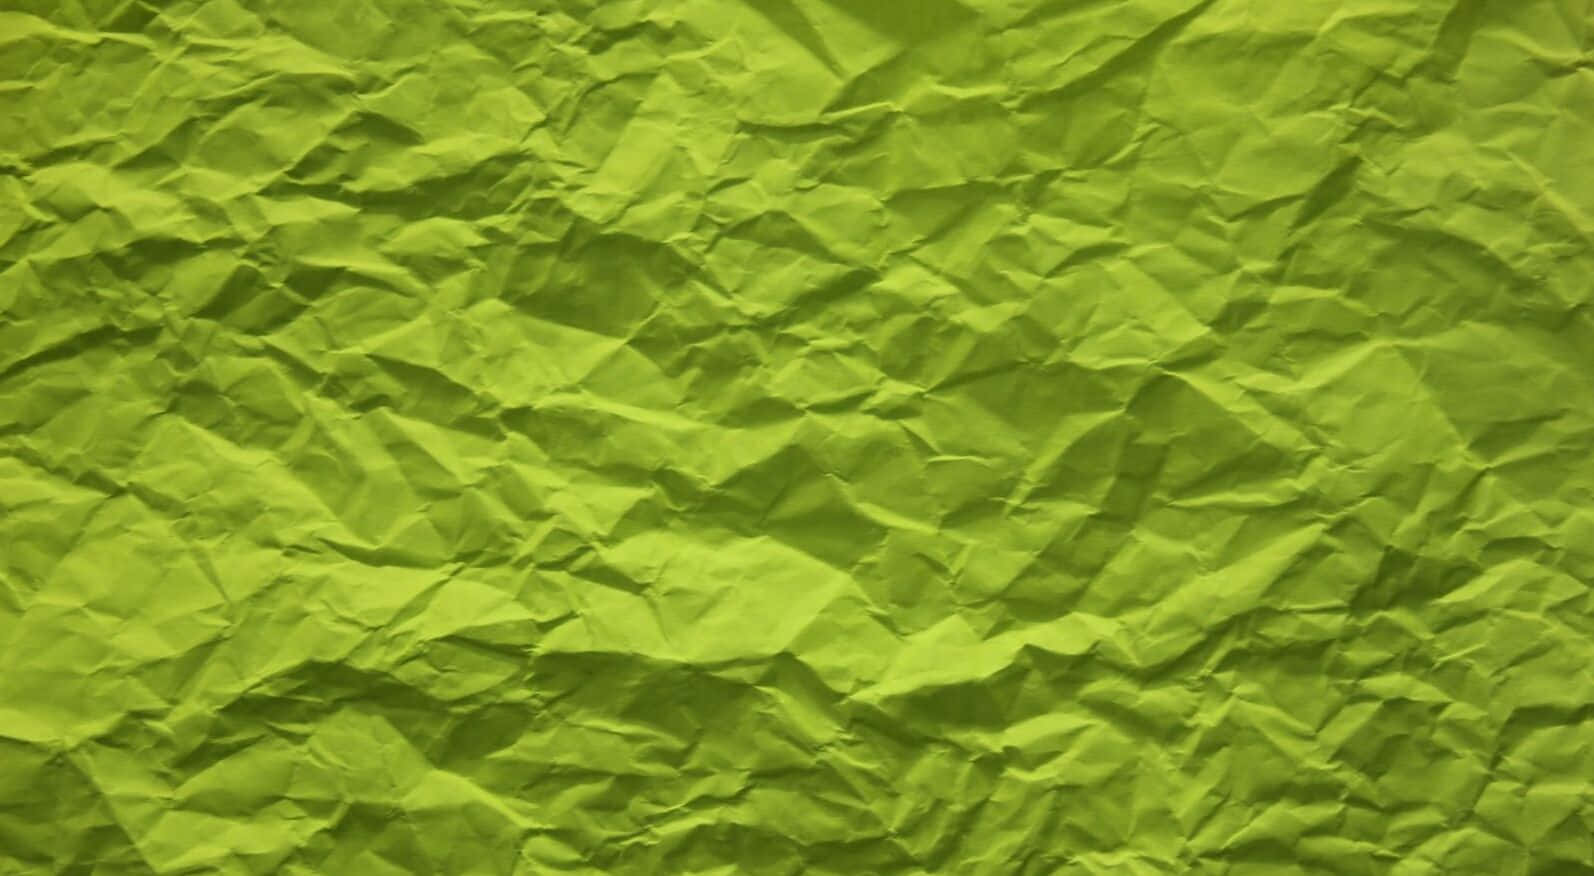 Texturade Papel Arrugado En Color Verde Lima Para Fondo De Escritorio De Computadora O Móvil.